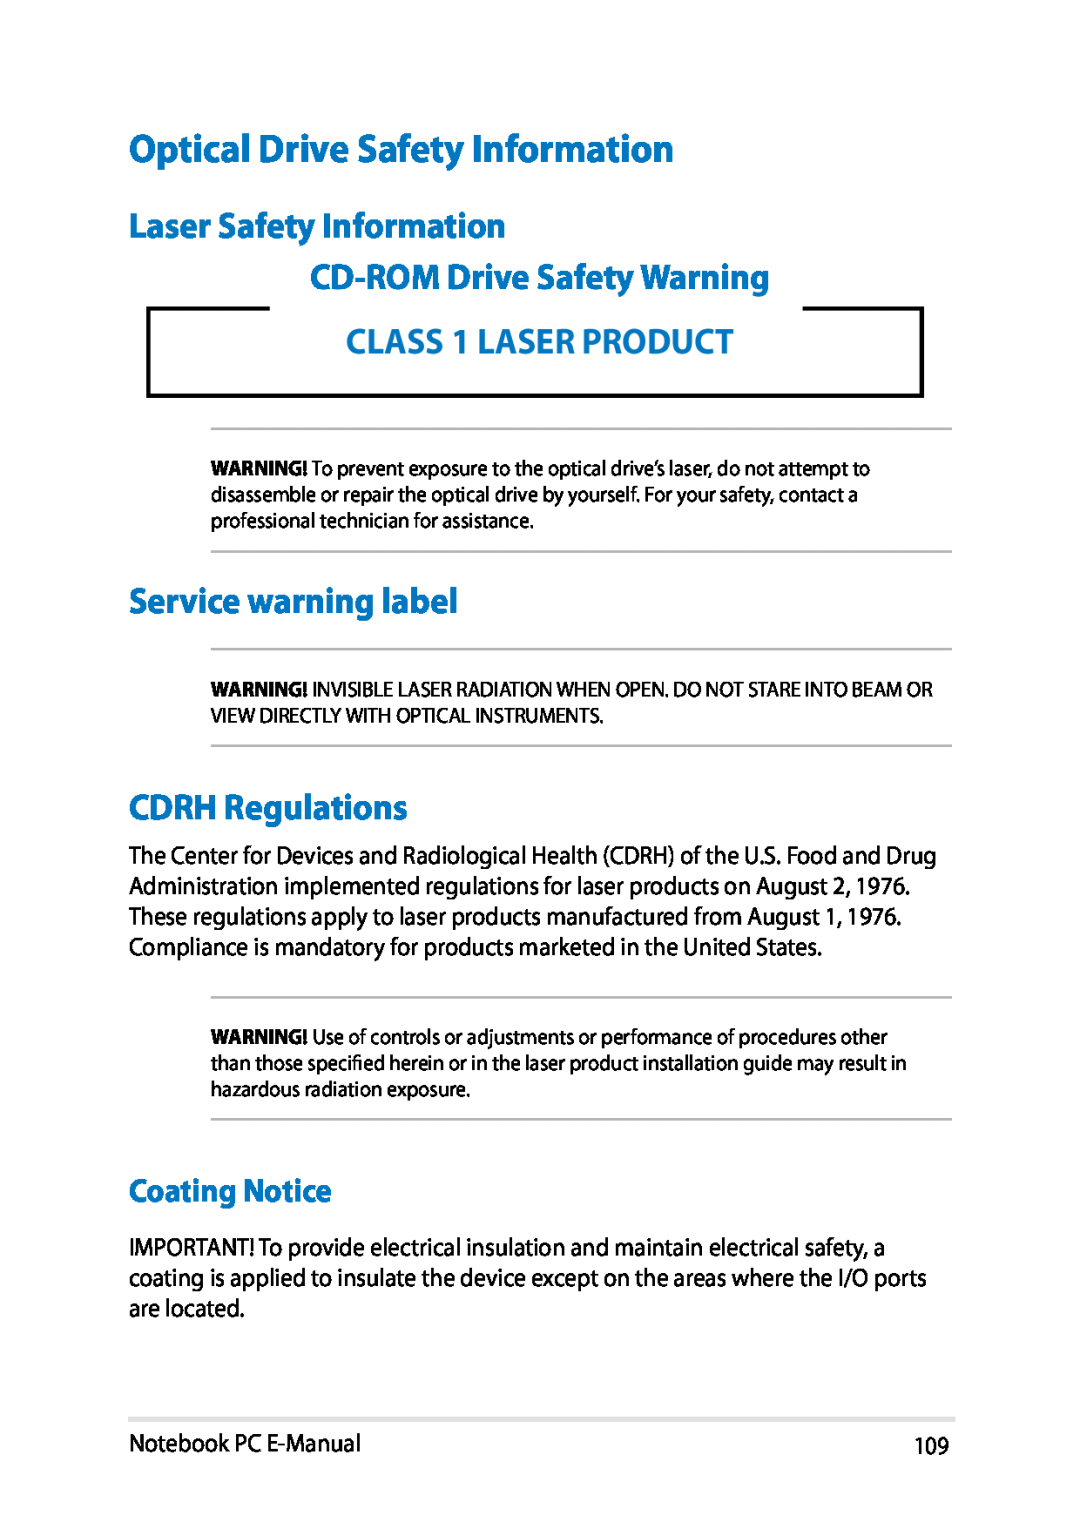 Asus E8438 Optical Drive Safety Information, Laser Safety Information CD-ROM Drive Safety Warning, CLASS 1 LASER PRODUCT 